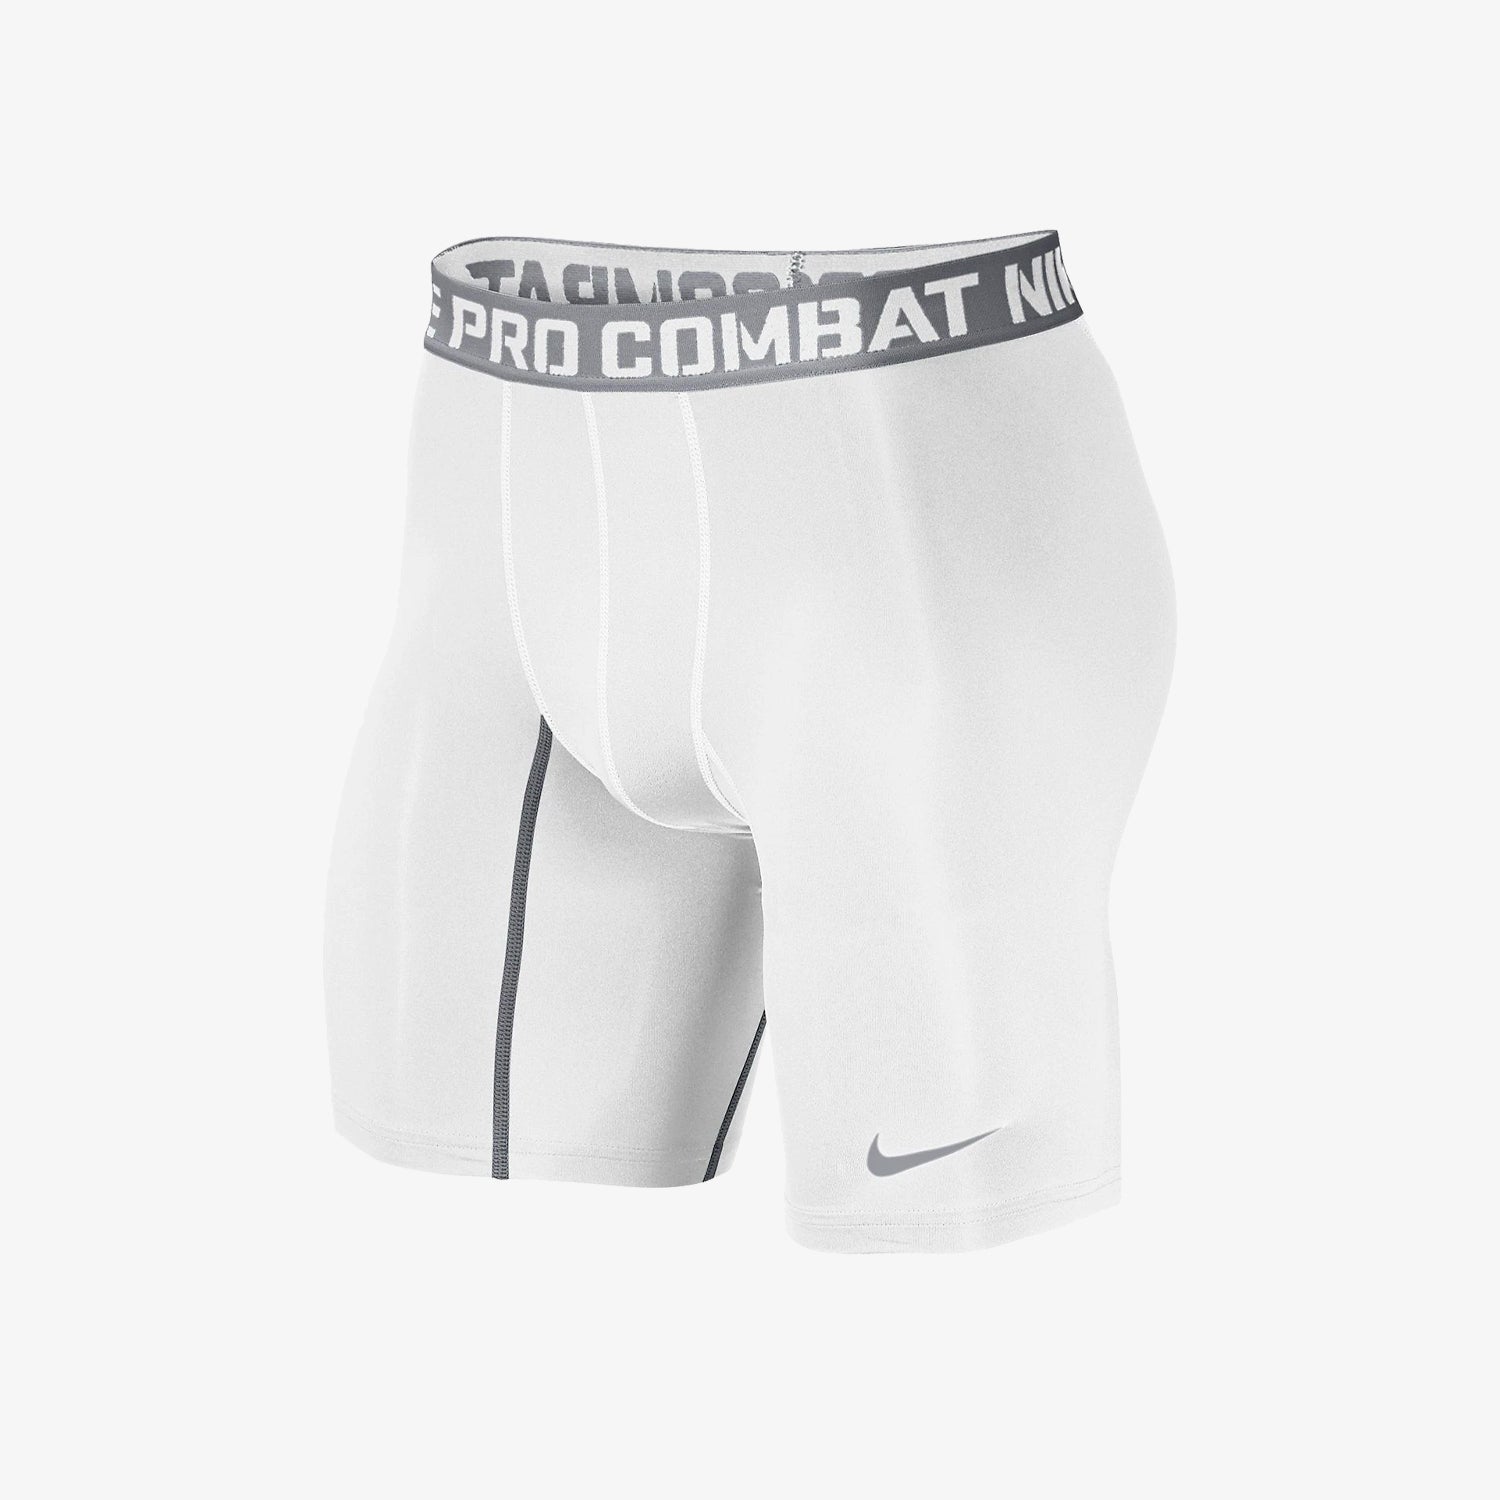 Pro Combat Core 2.0 Compression Men's Shorts White